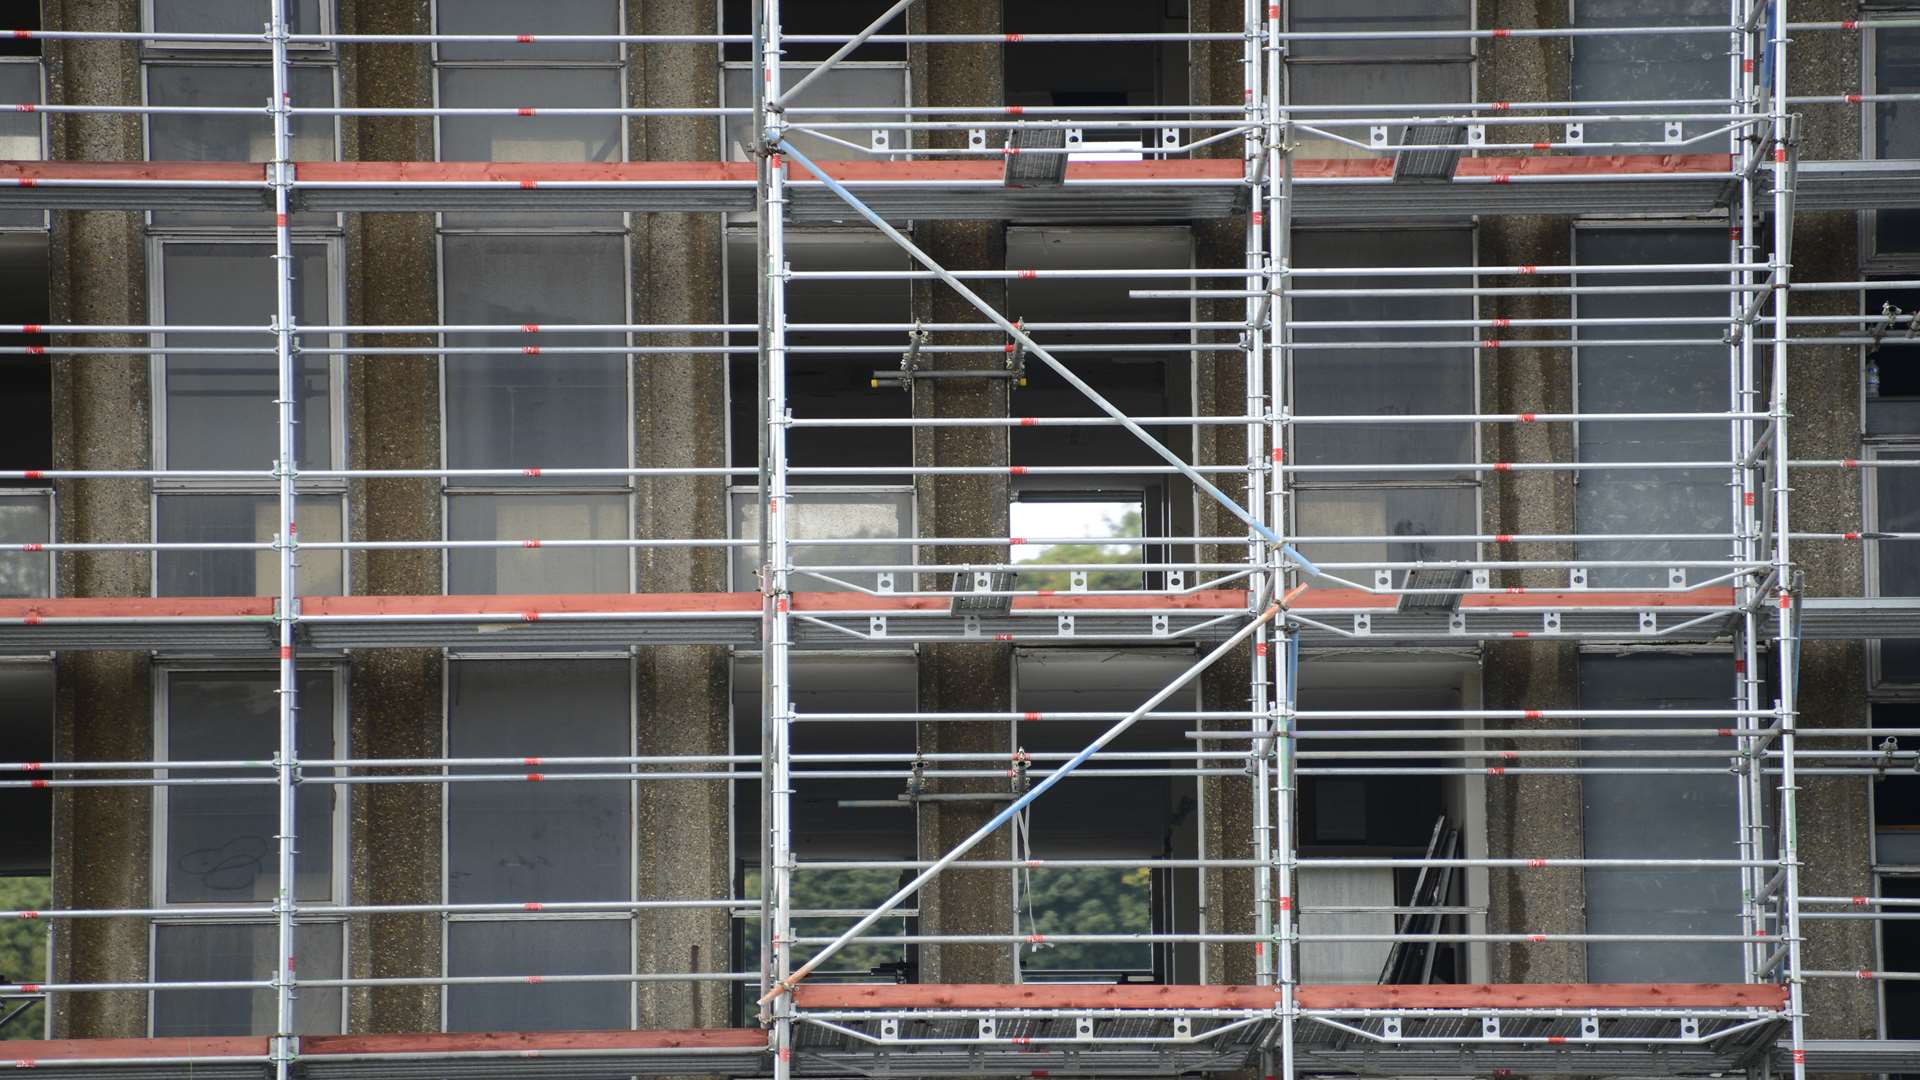 £4,000 worth of scaffolding was stolen.